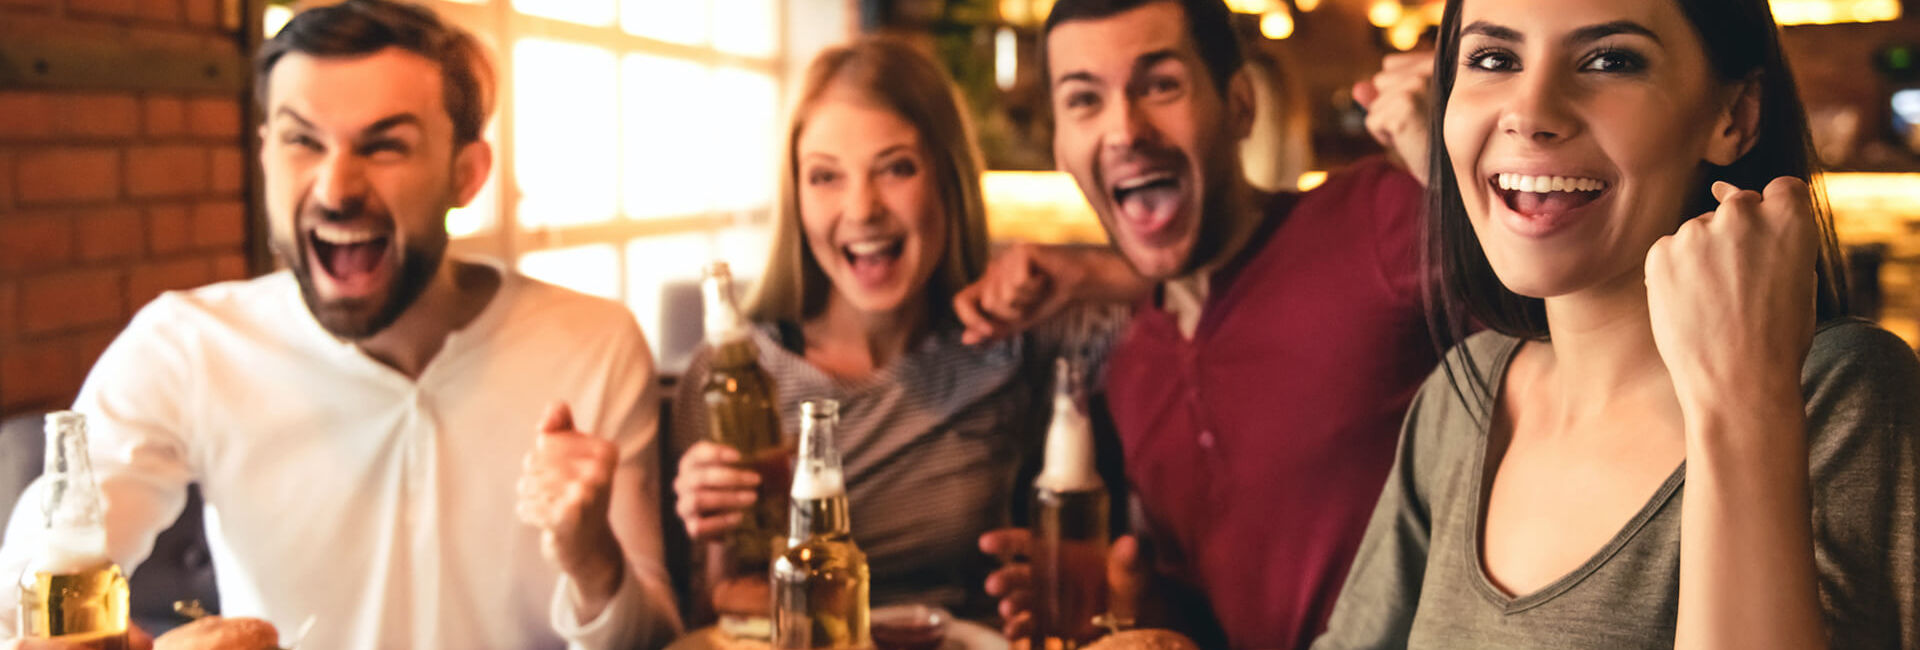 Two couples drinking beer and cheering - Pub Quiz Trivia - Gasterij 't Karrewiel